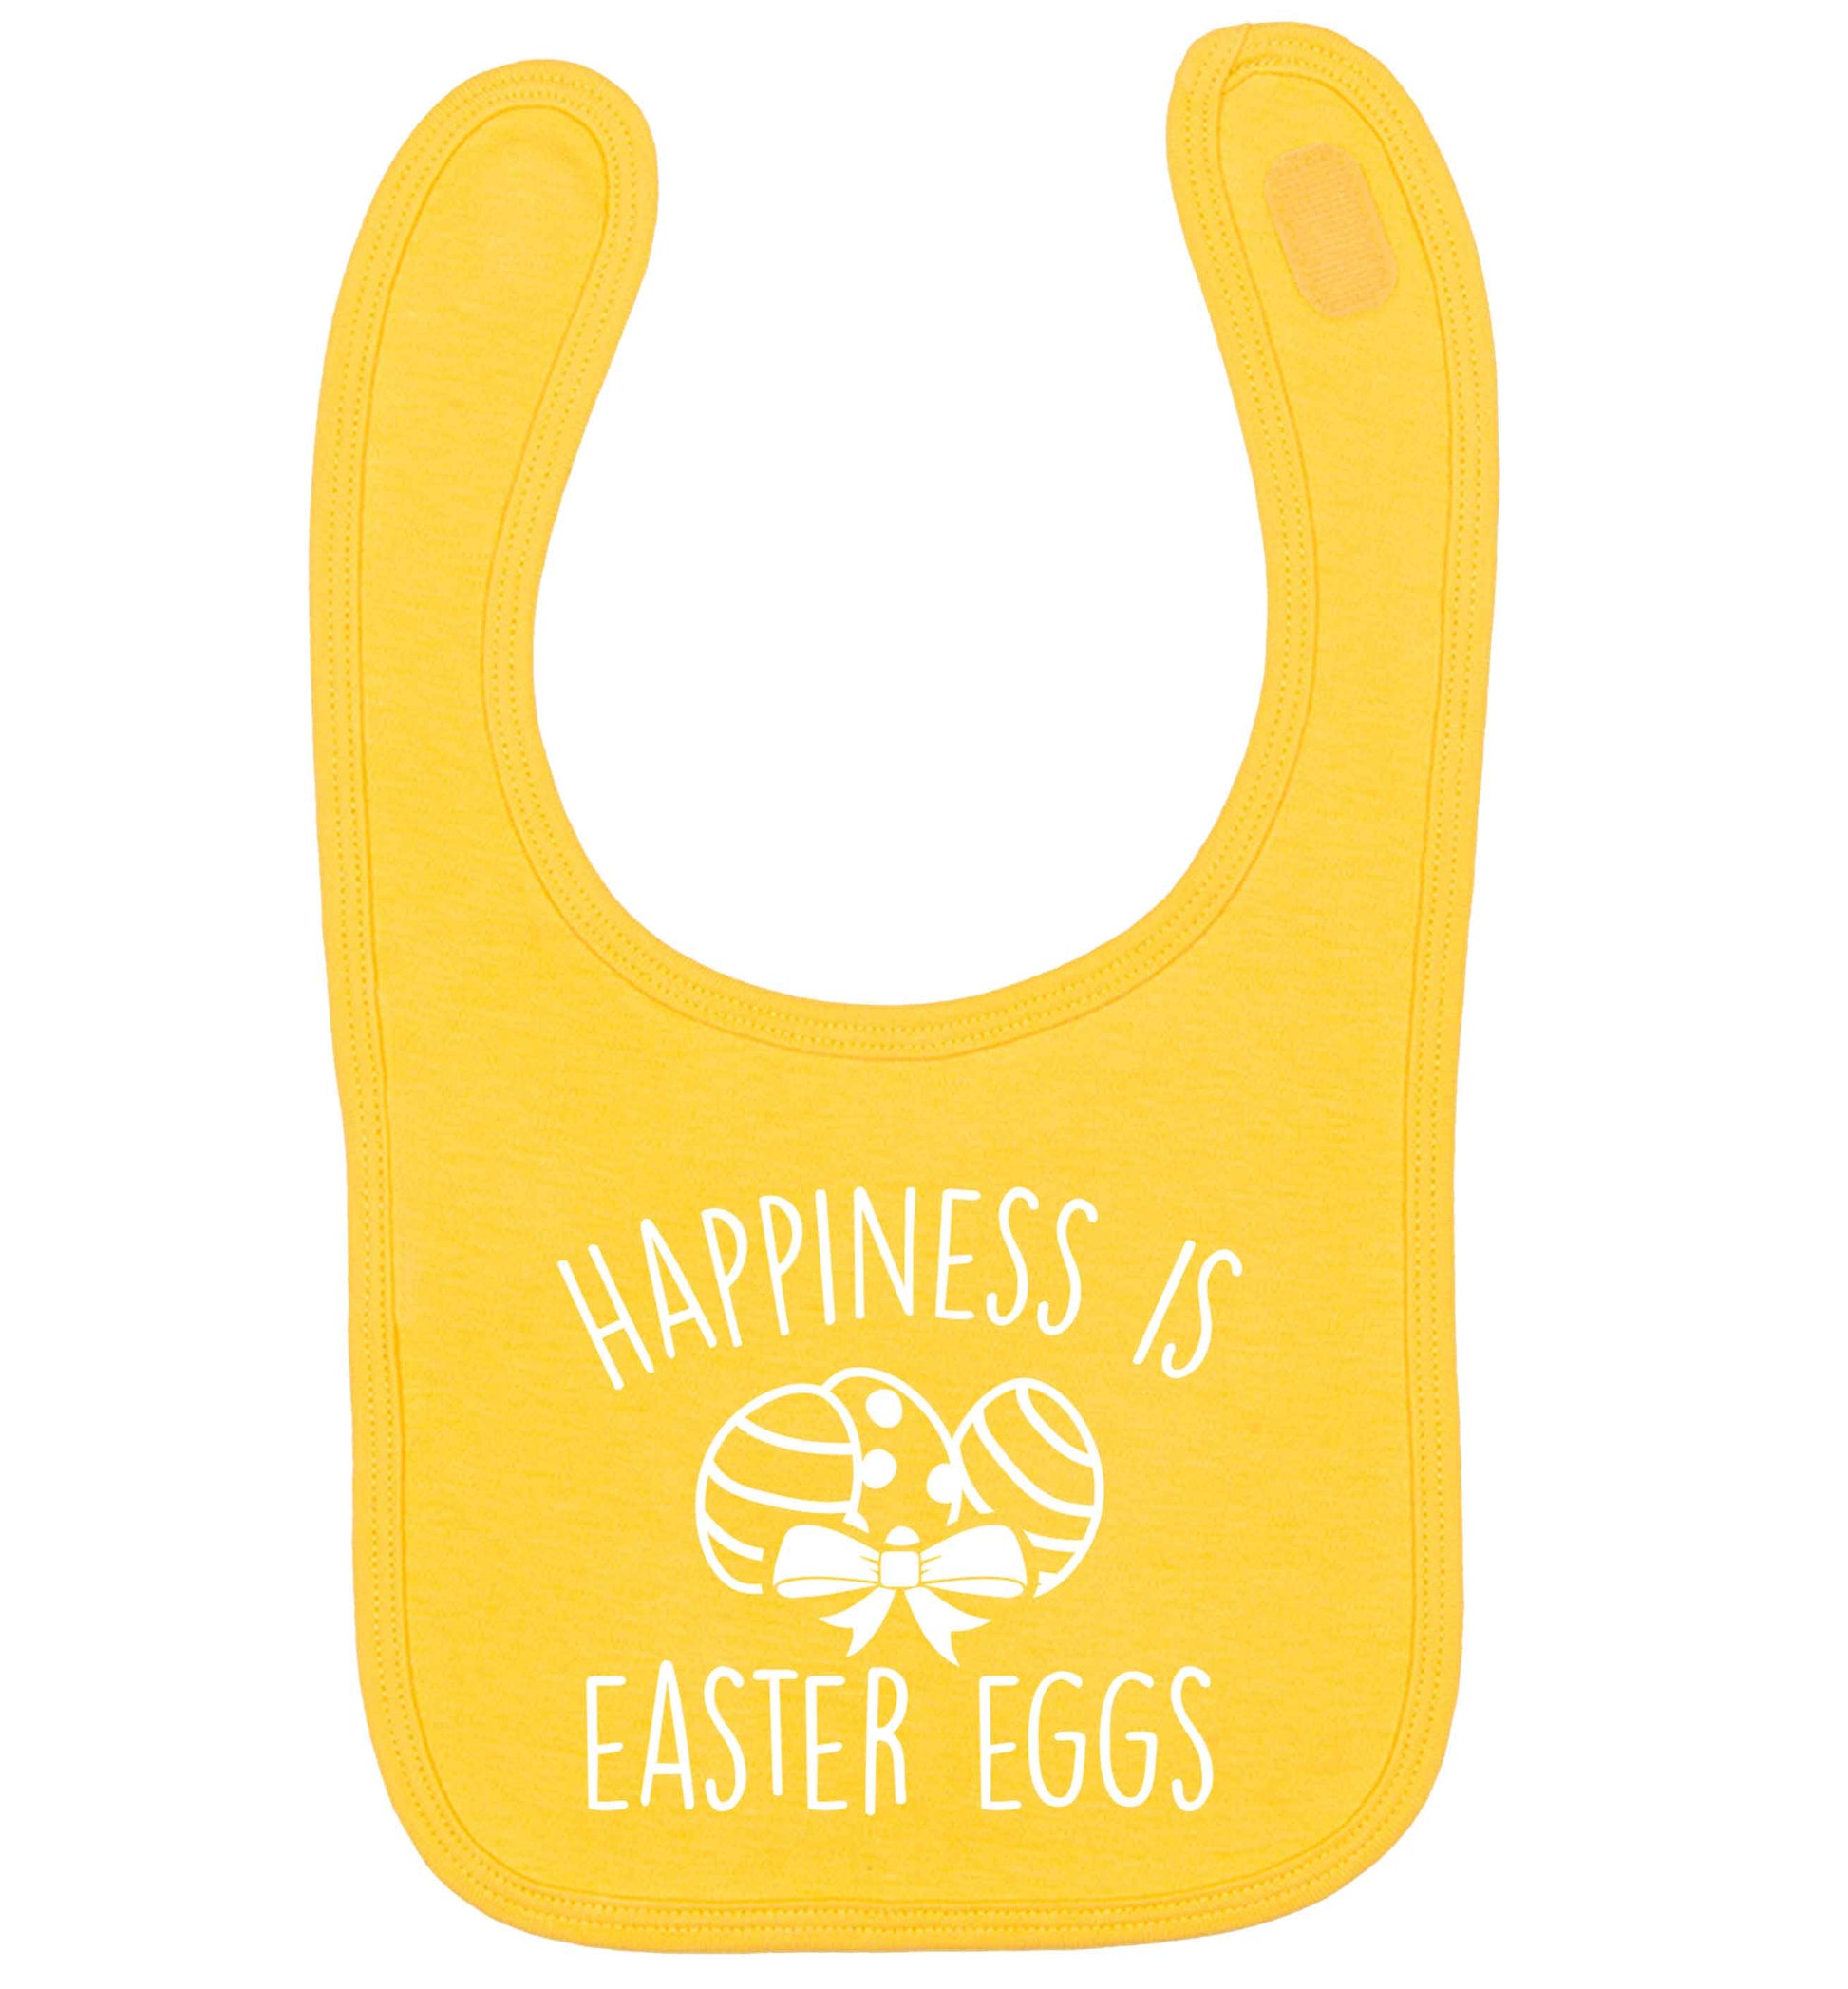 Happiness is Easter eggs yellow baby bib